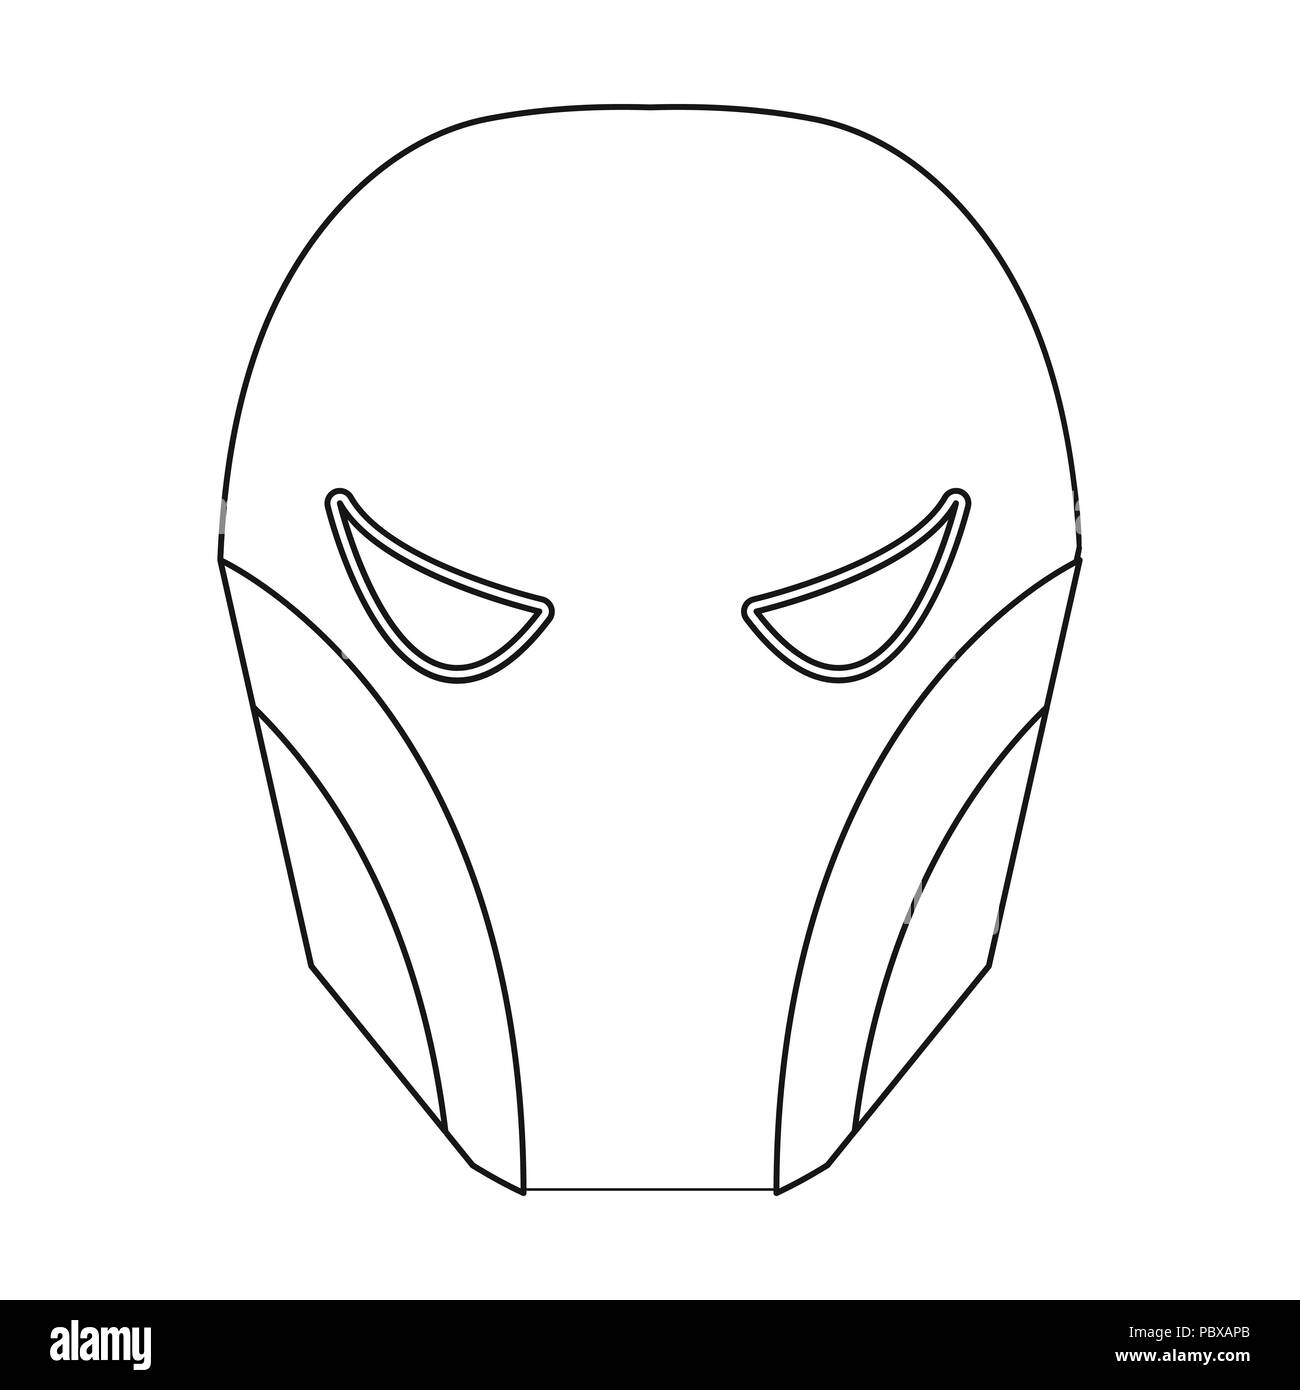 Superhero's helmet icon in outline style isolated on white